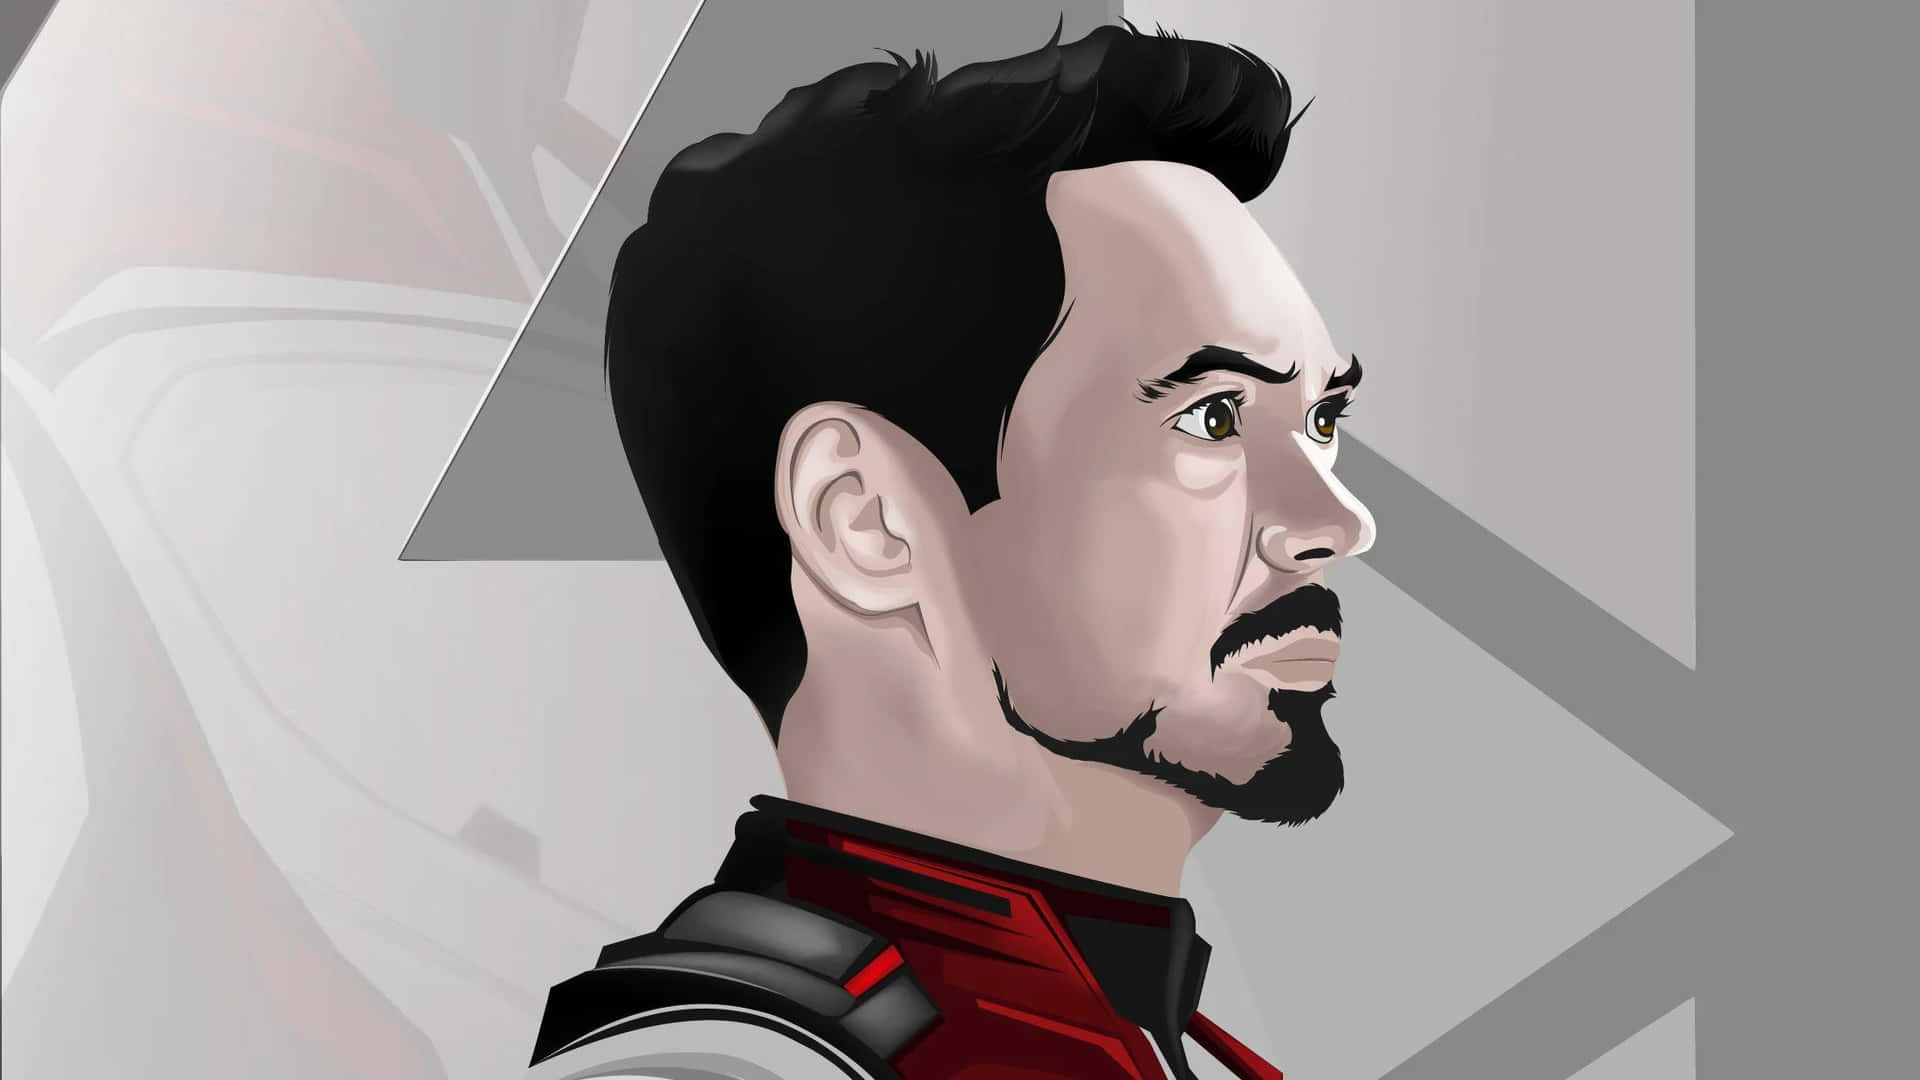 Tony Stark Illustration Background